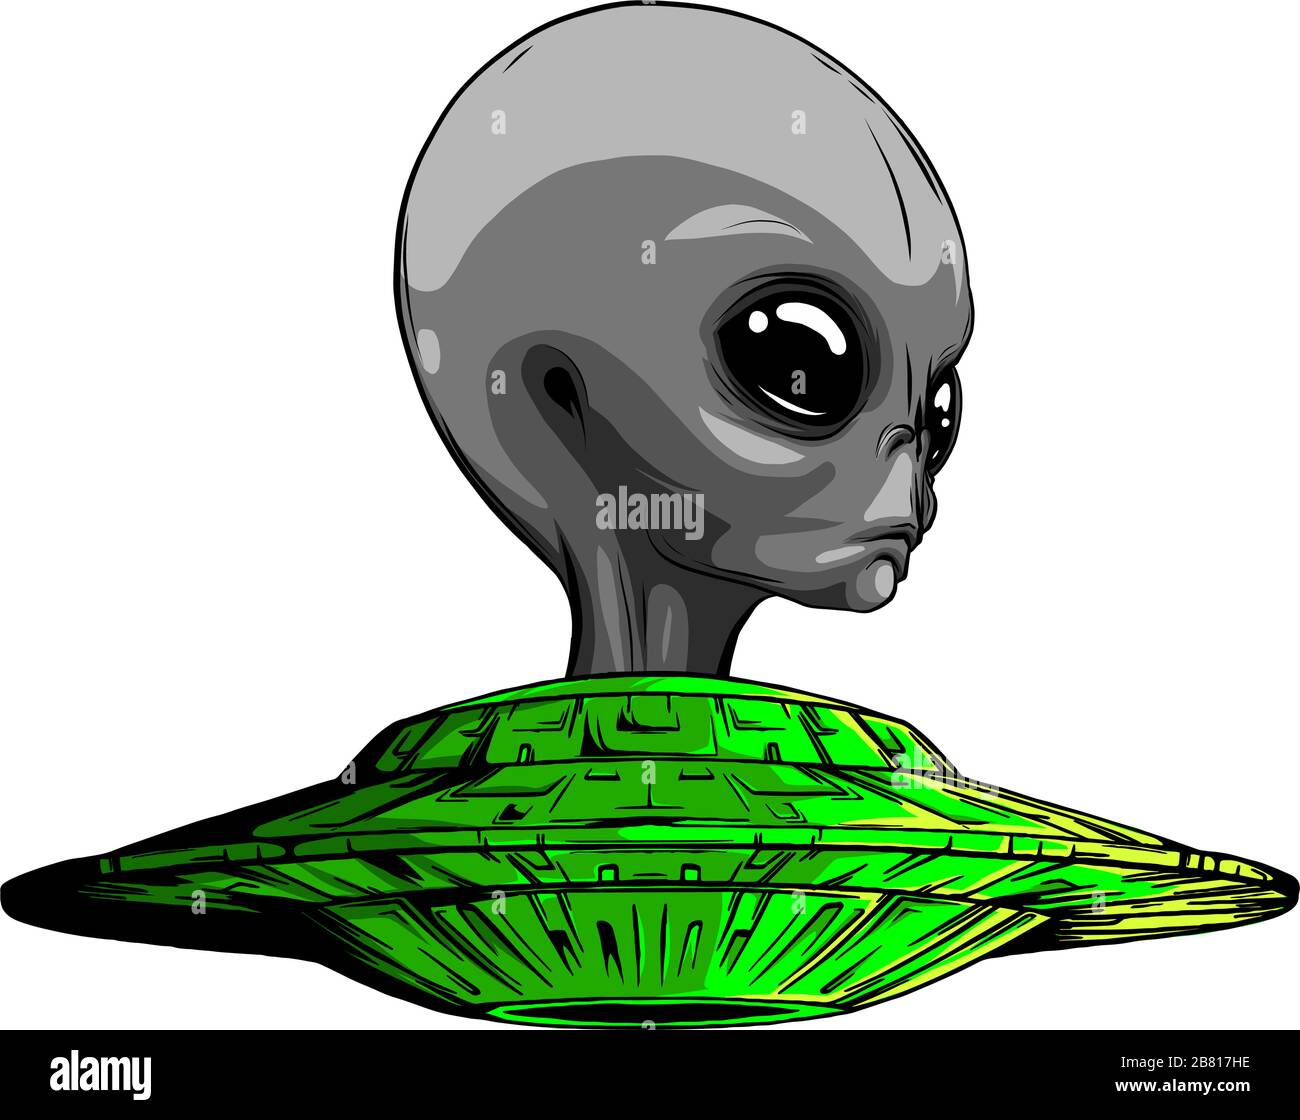 Ufo art Stock Vector Images - Alamy